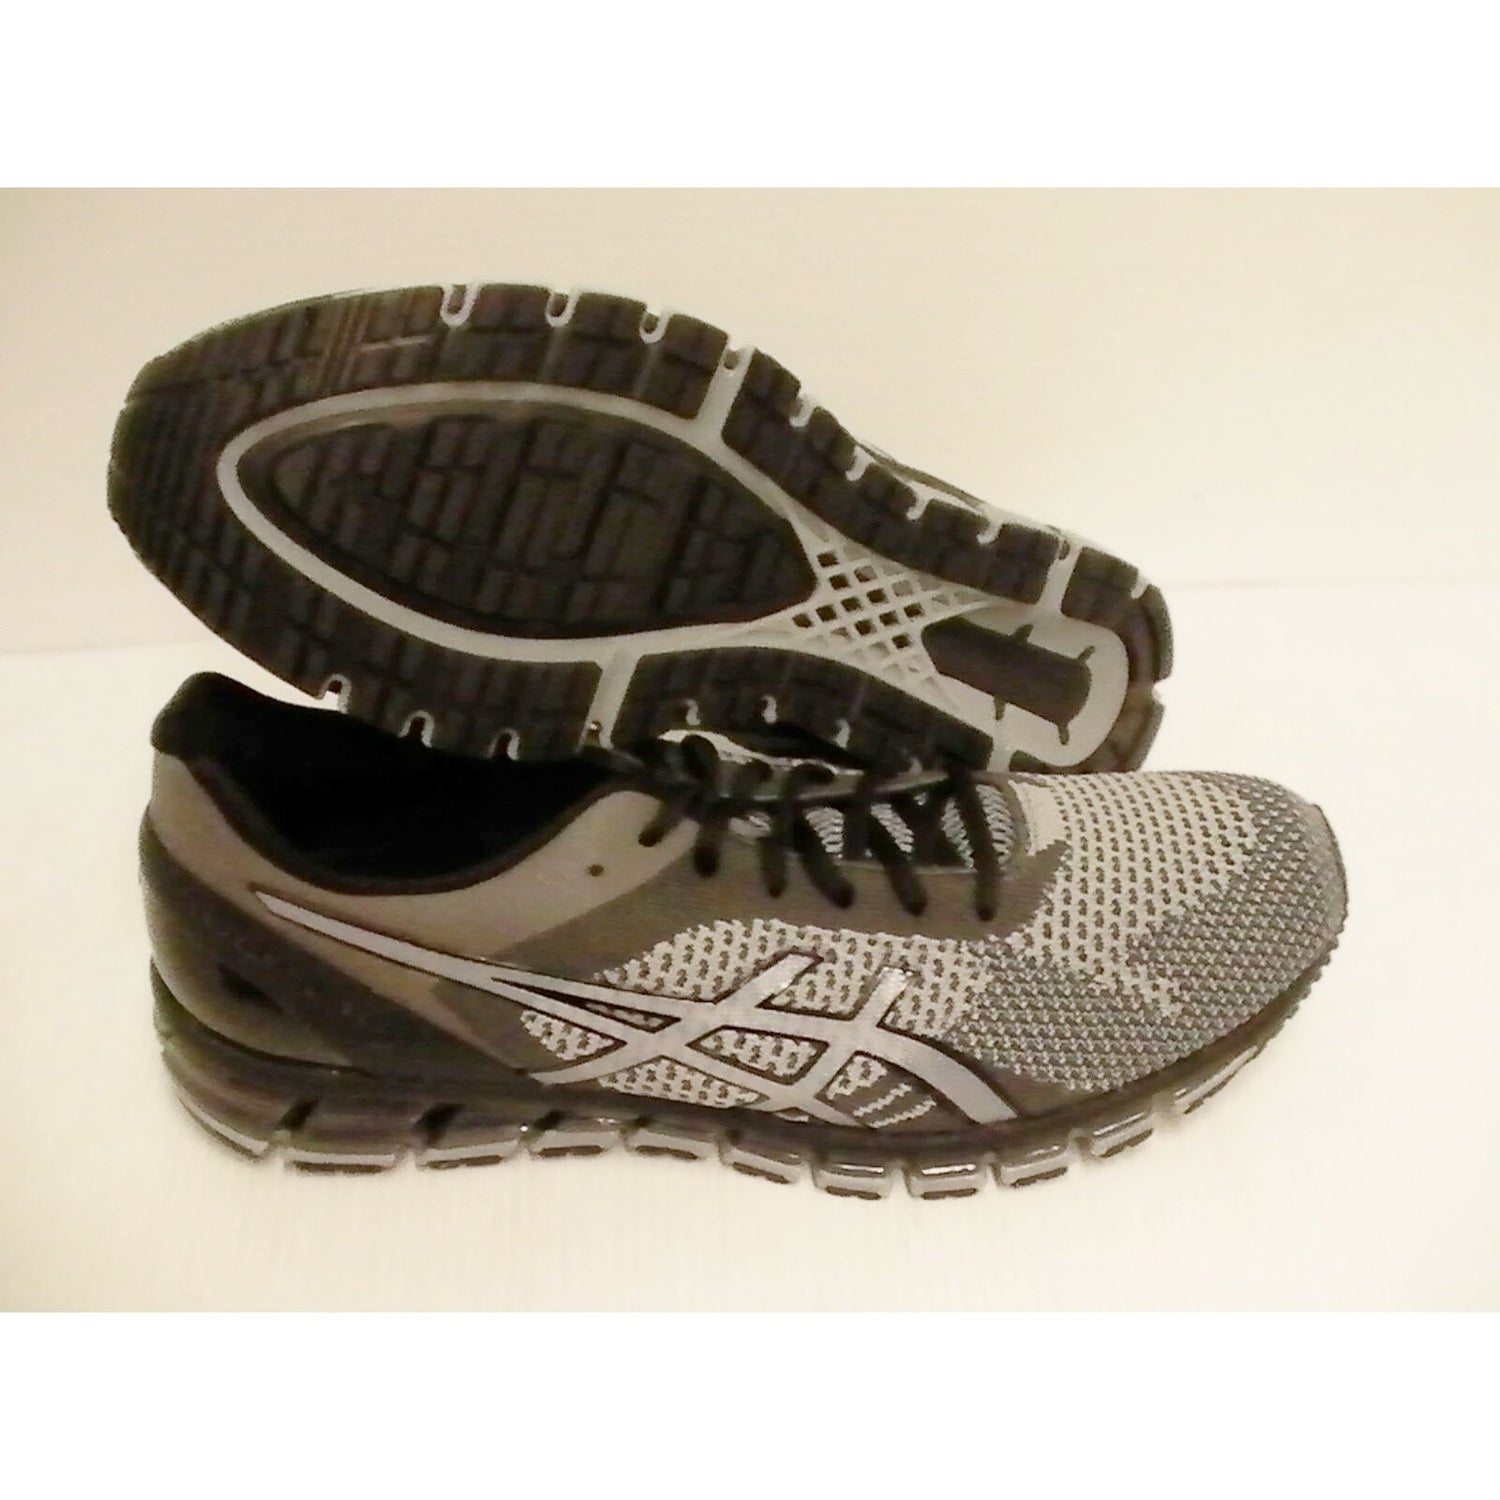 Asics men's gel quantum 360 knit running shoes mid grey carbon black size 11 us